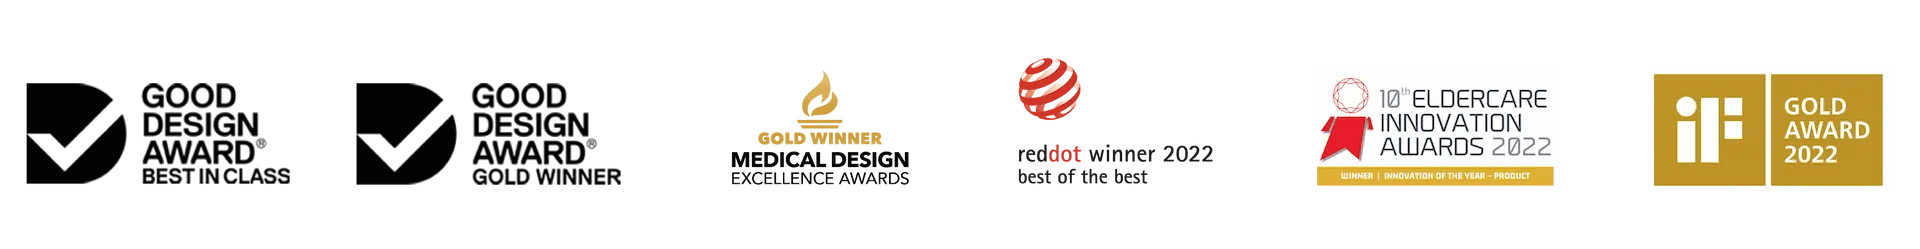 Rediroom-Design-Awards-01